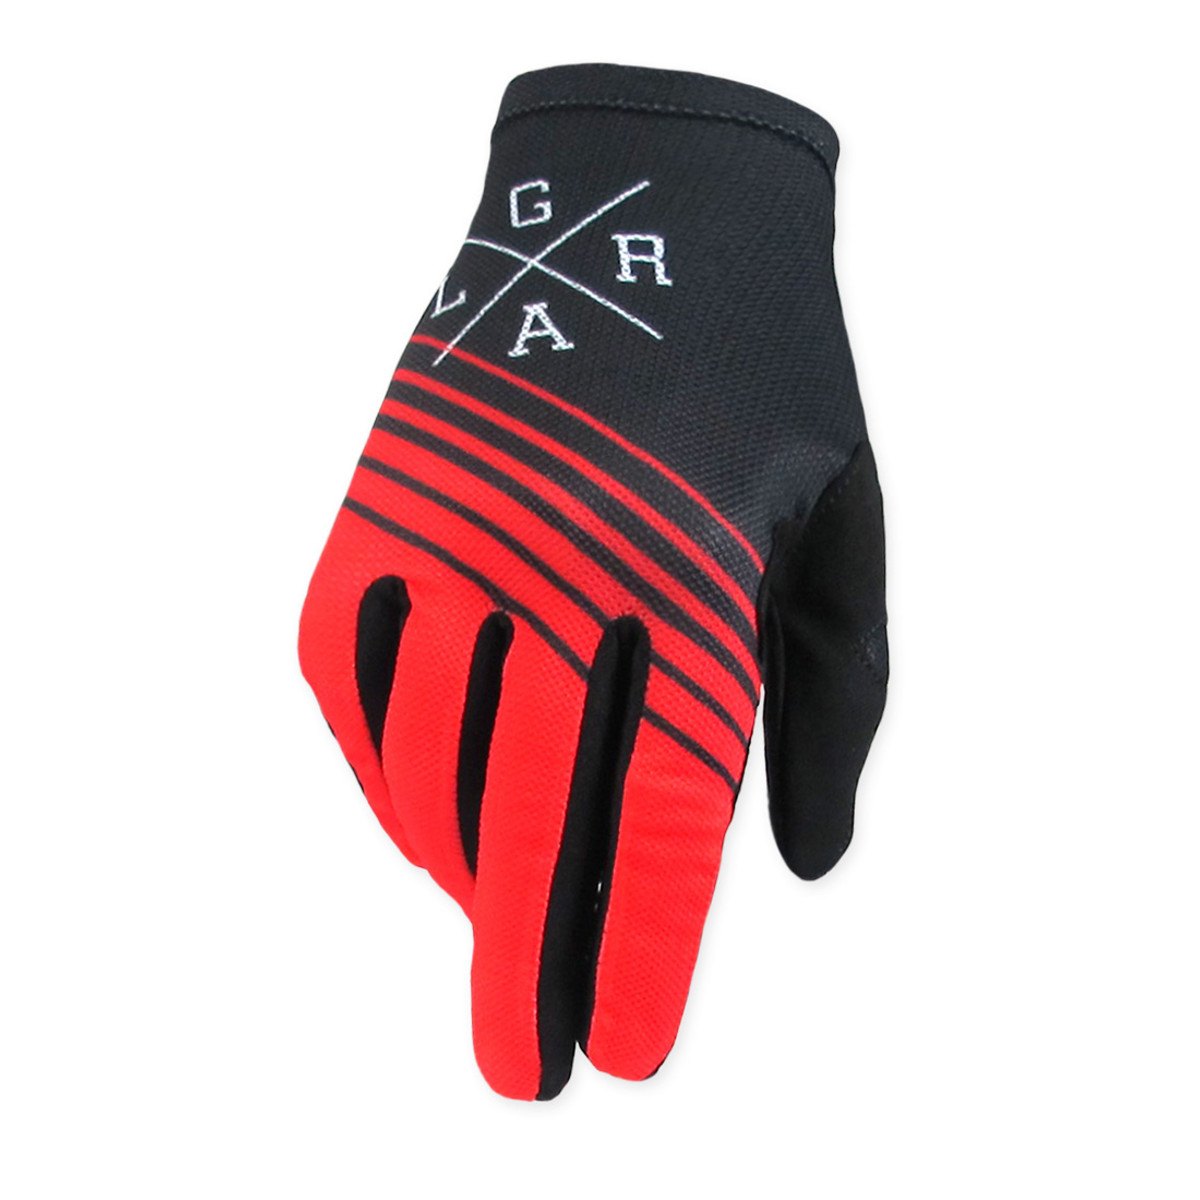 Loose Riders Bike Gloves LRGA Second Skin Red